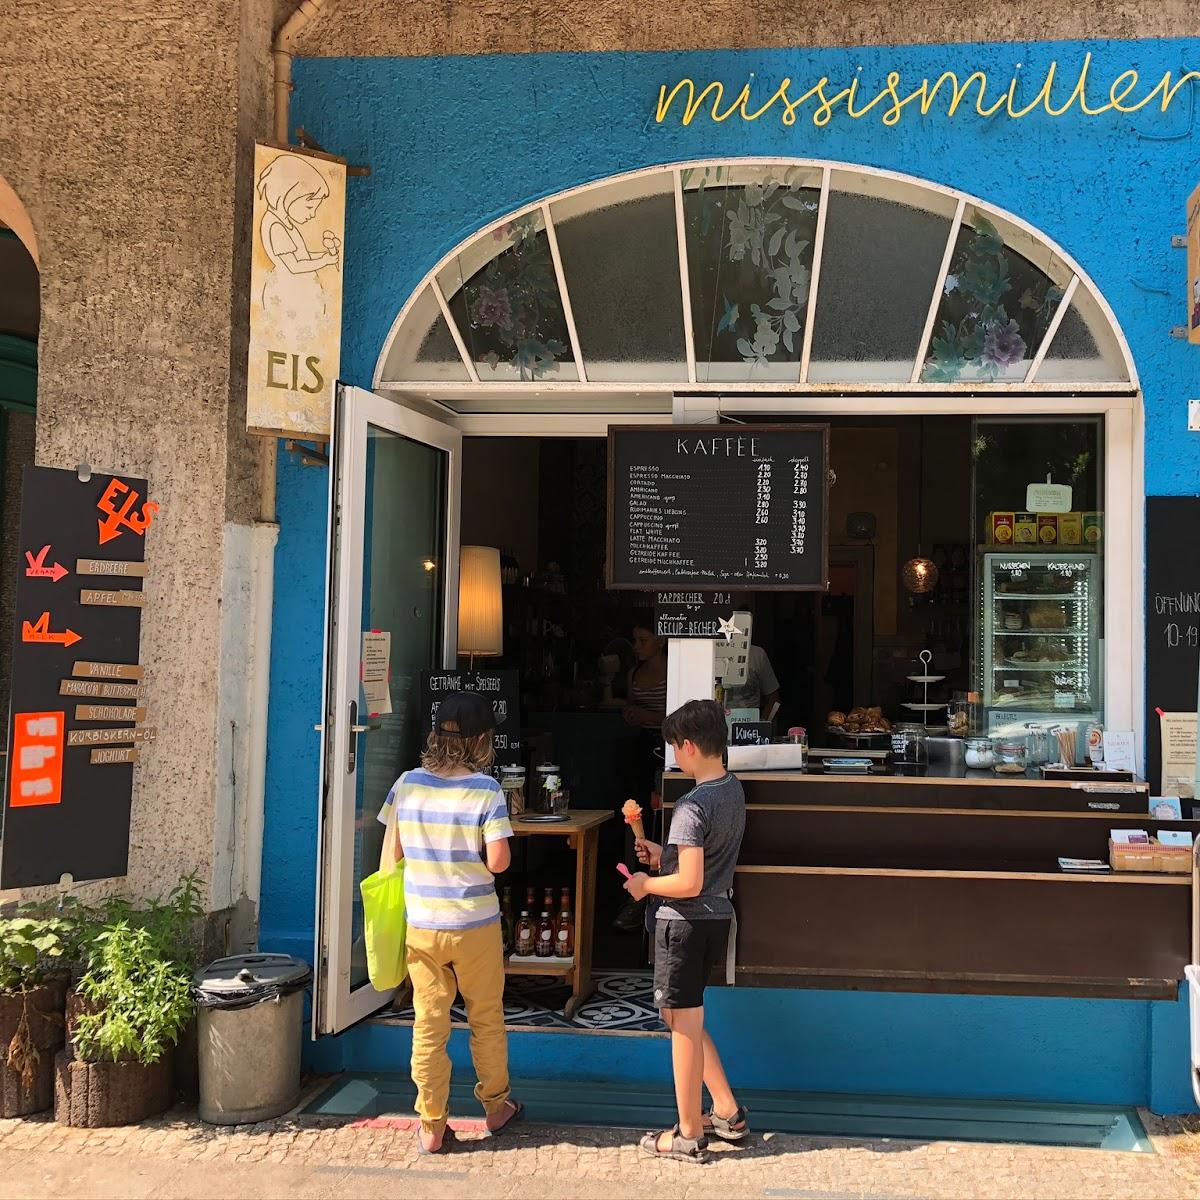 Restaurant "RUDIMARIE + missismiller" in Berlin